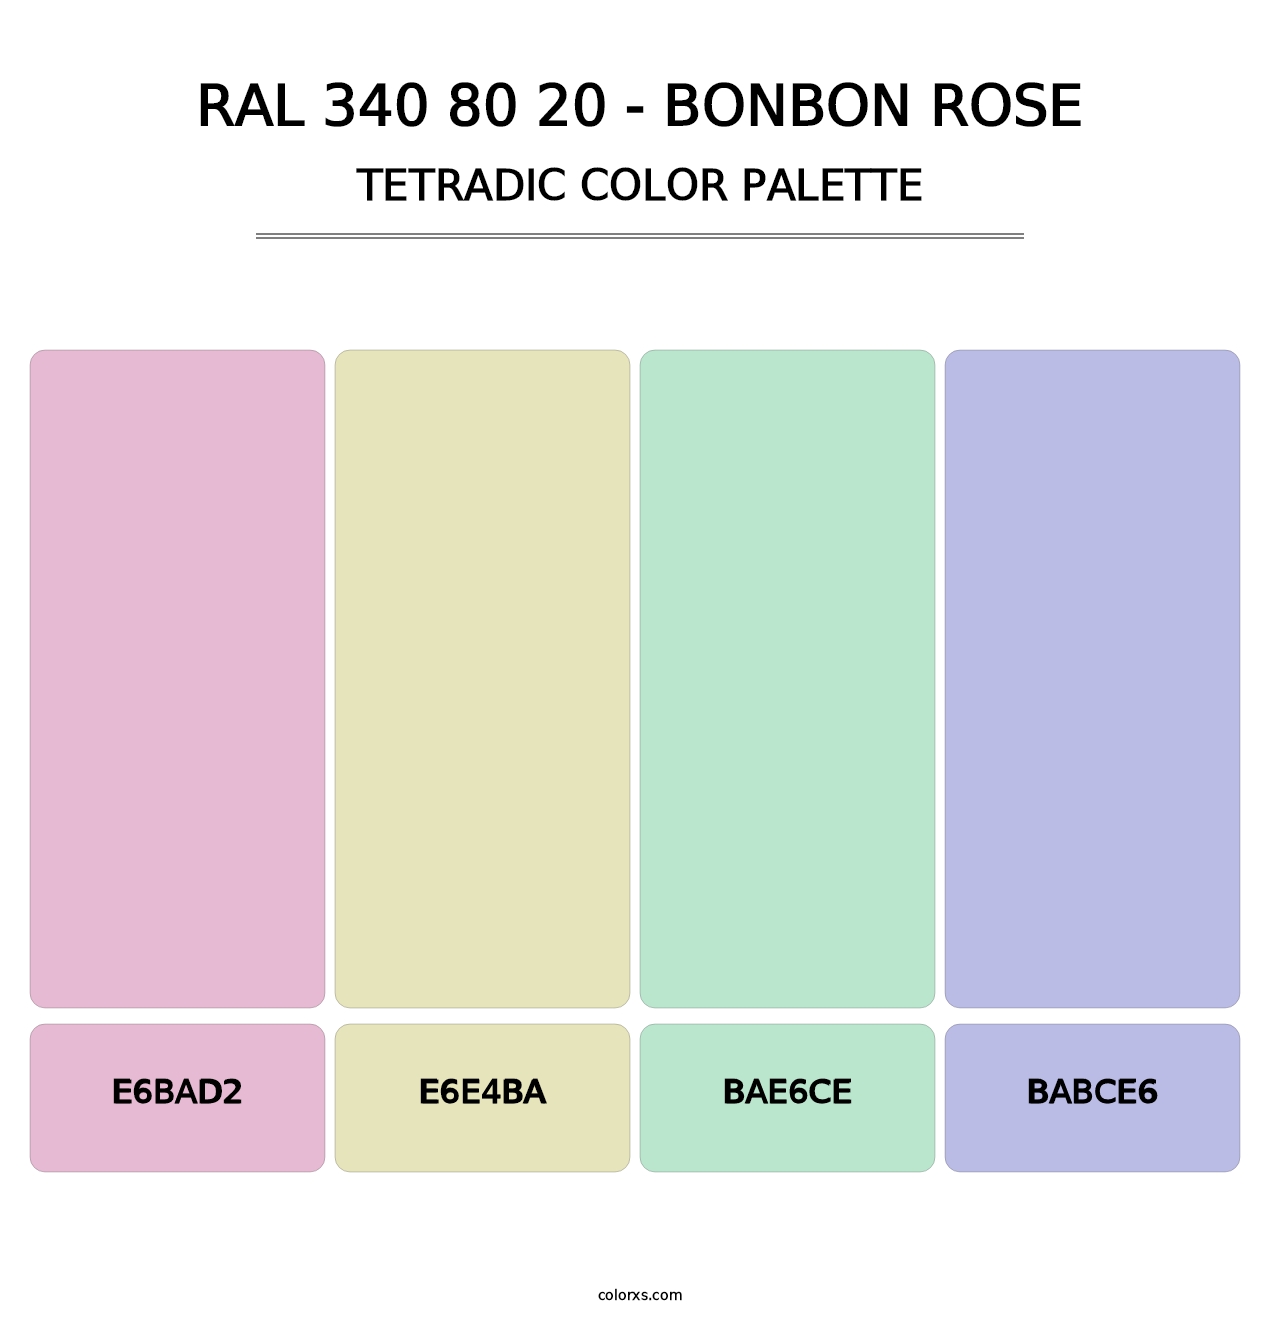 RAL 340 80 20 - Bonbon Rose - Tetradic Color Palette